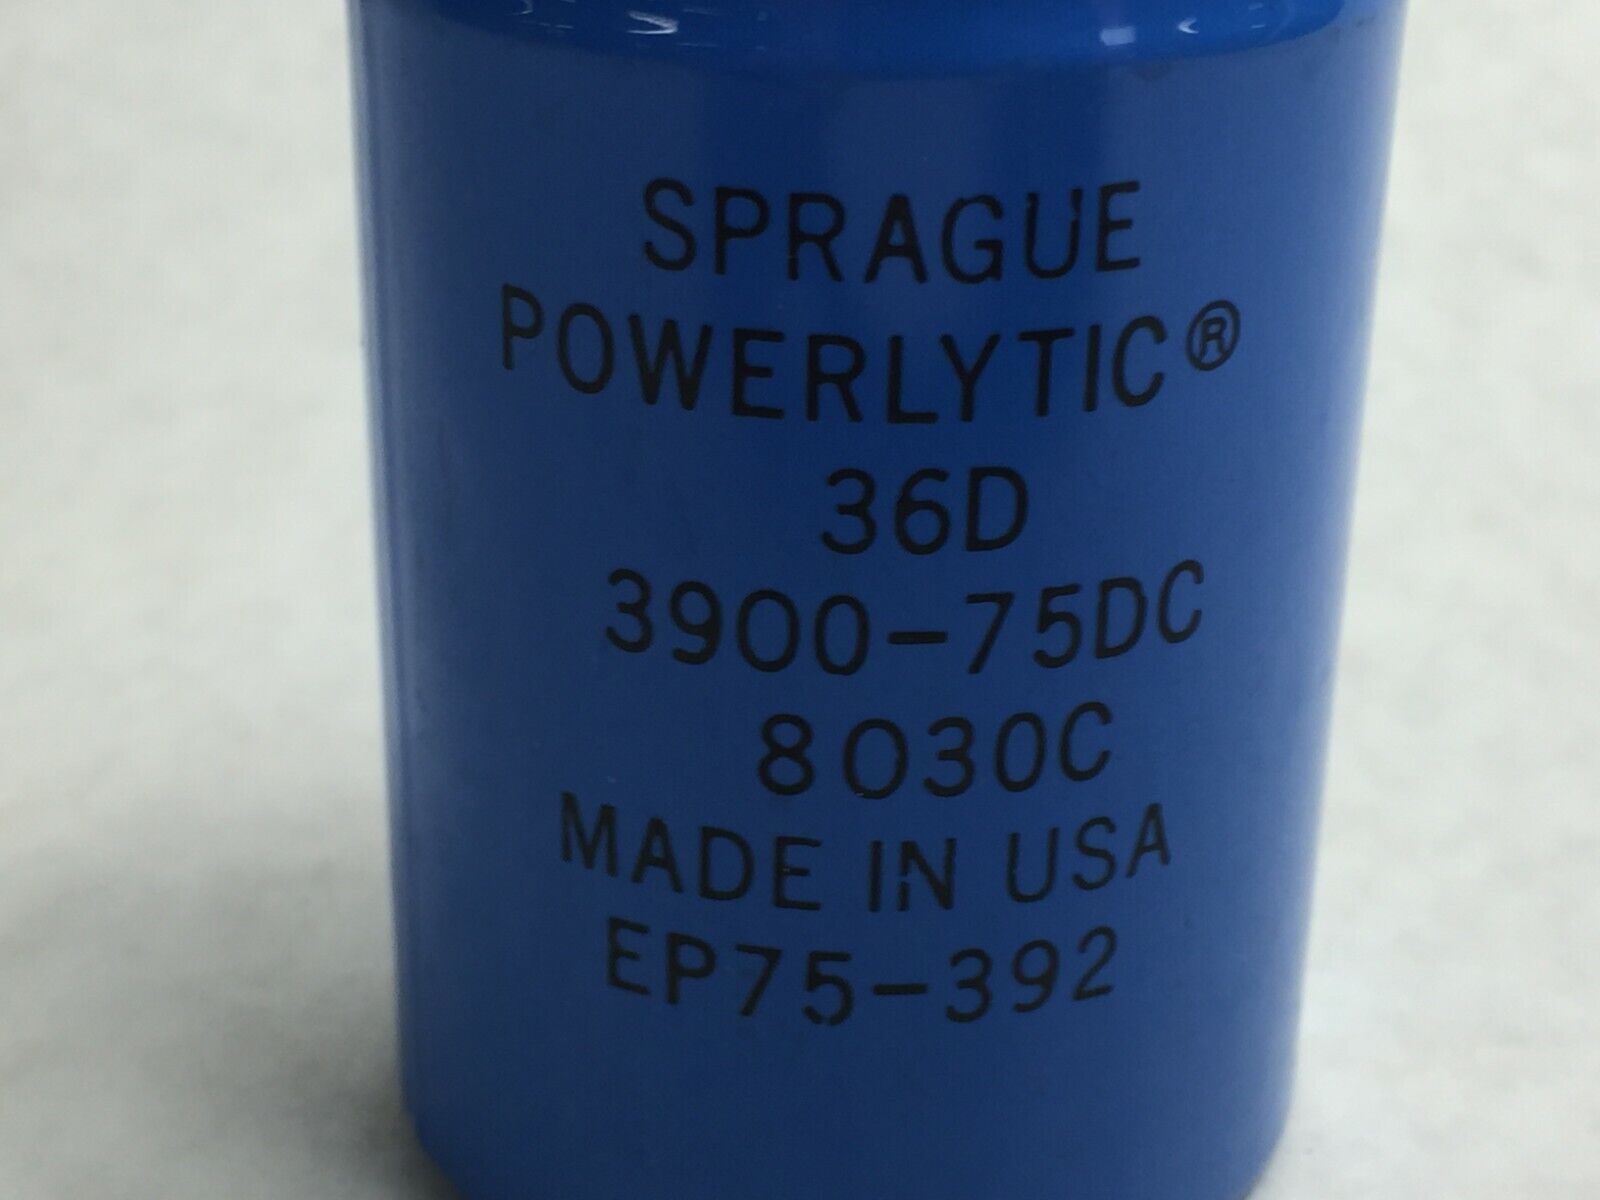 NOS Sprague Powerlytic 36D 3900-75DC EP75-392